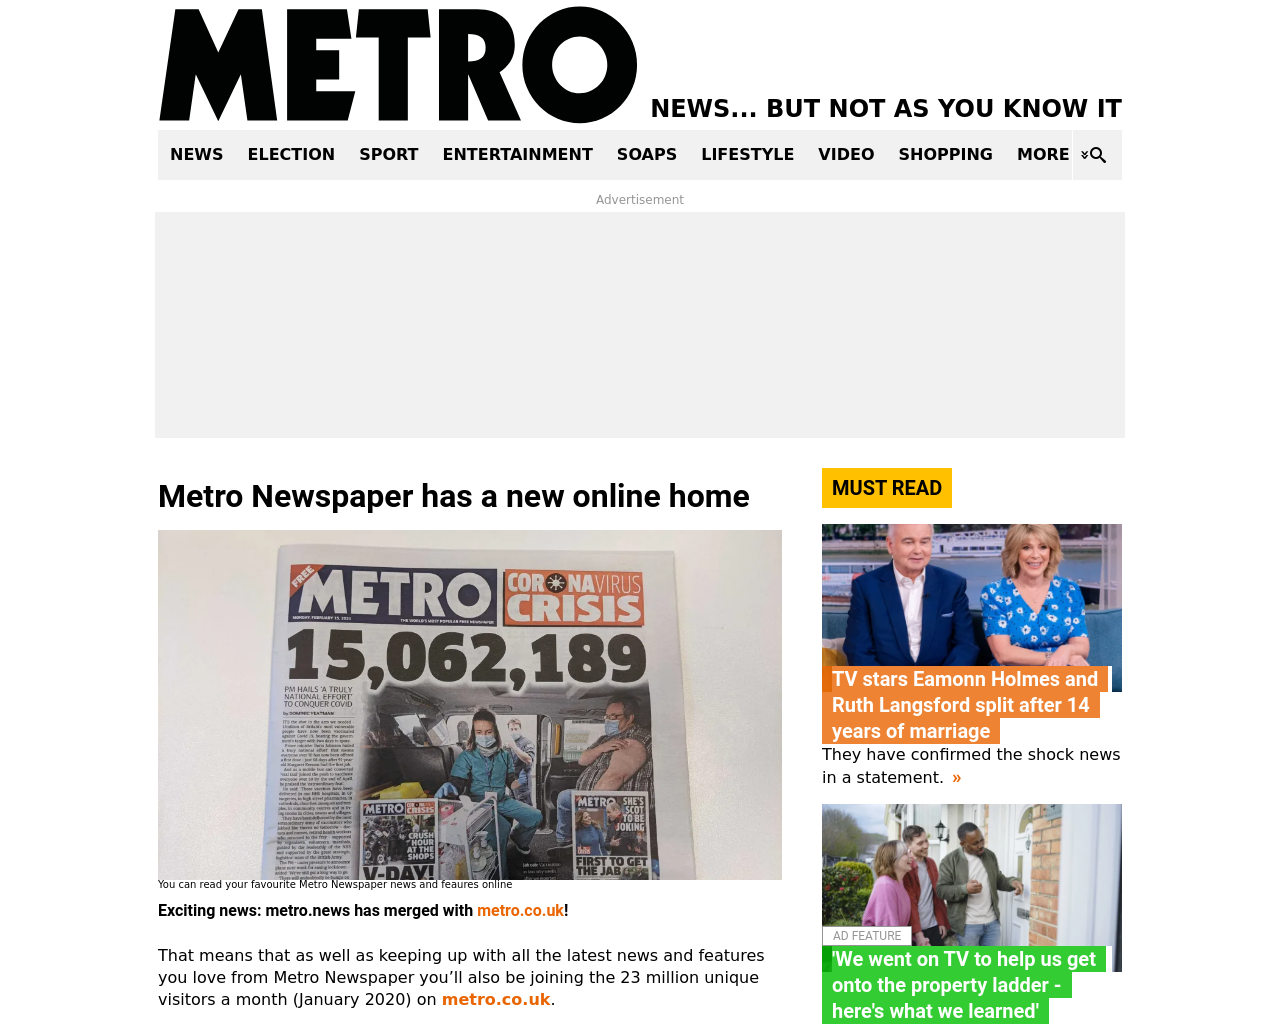 metro.news